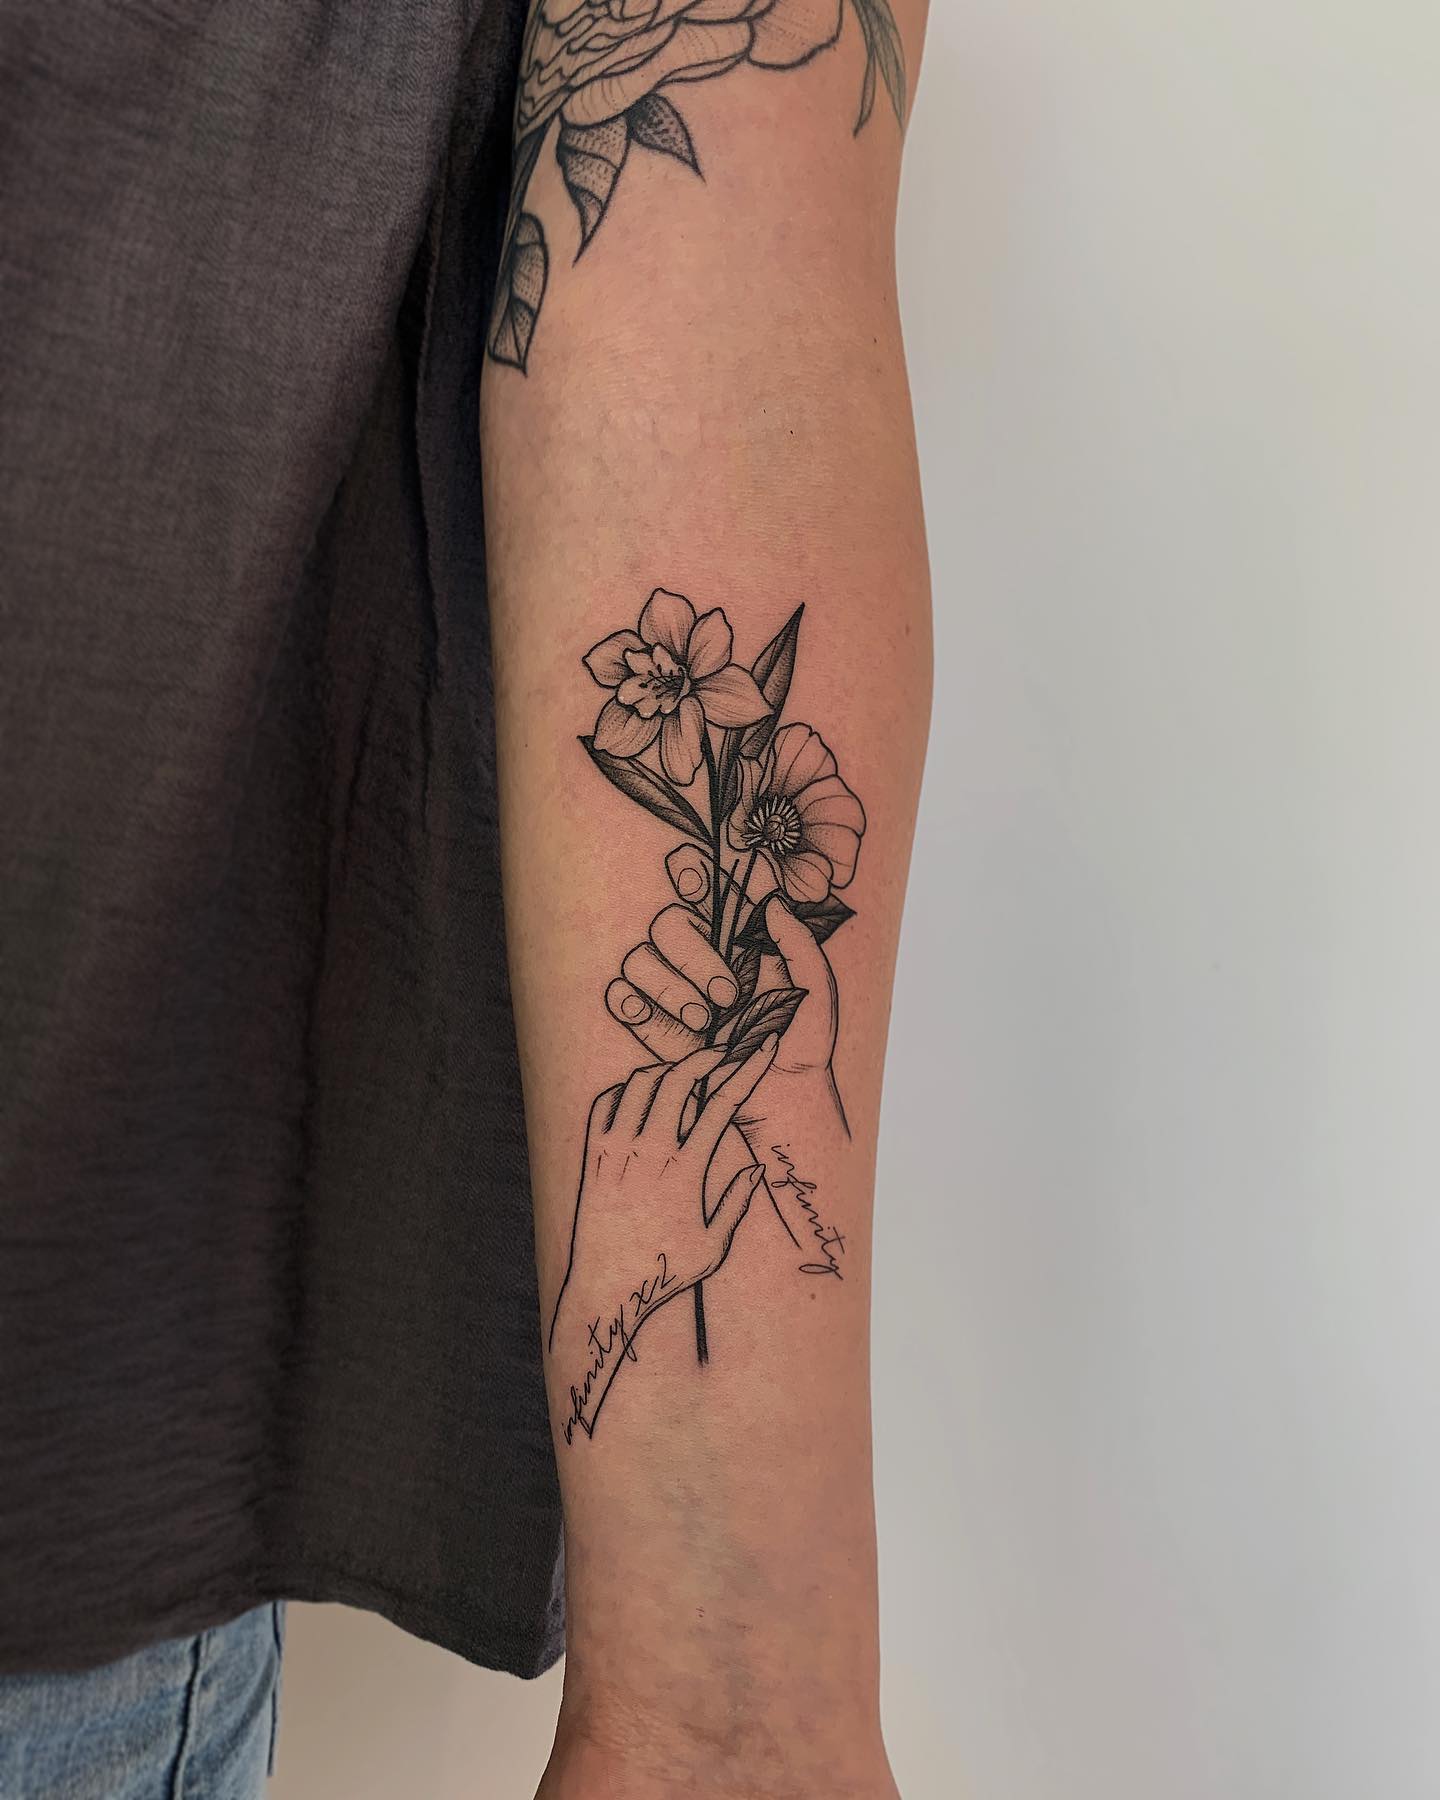 Tatuaje de narciso negro en el brazo.